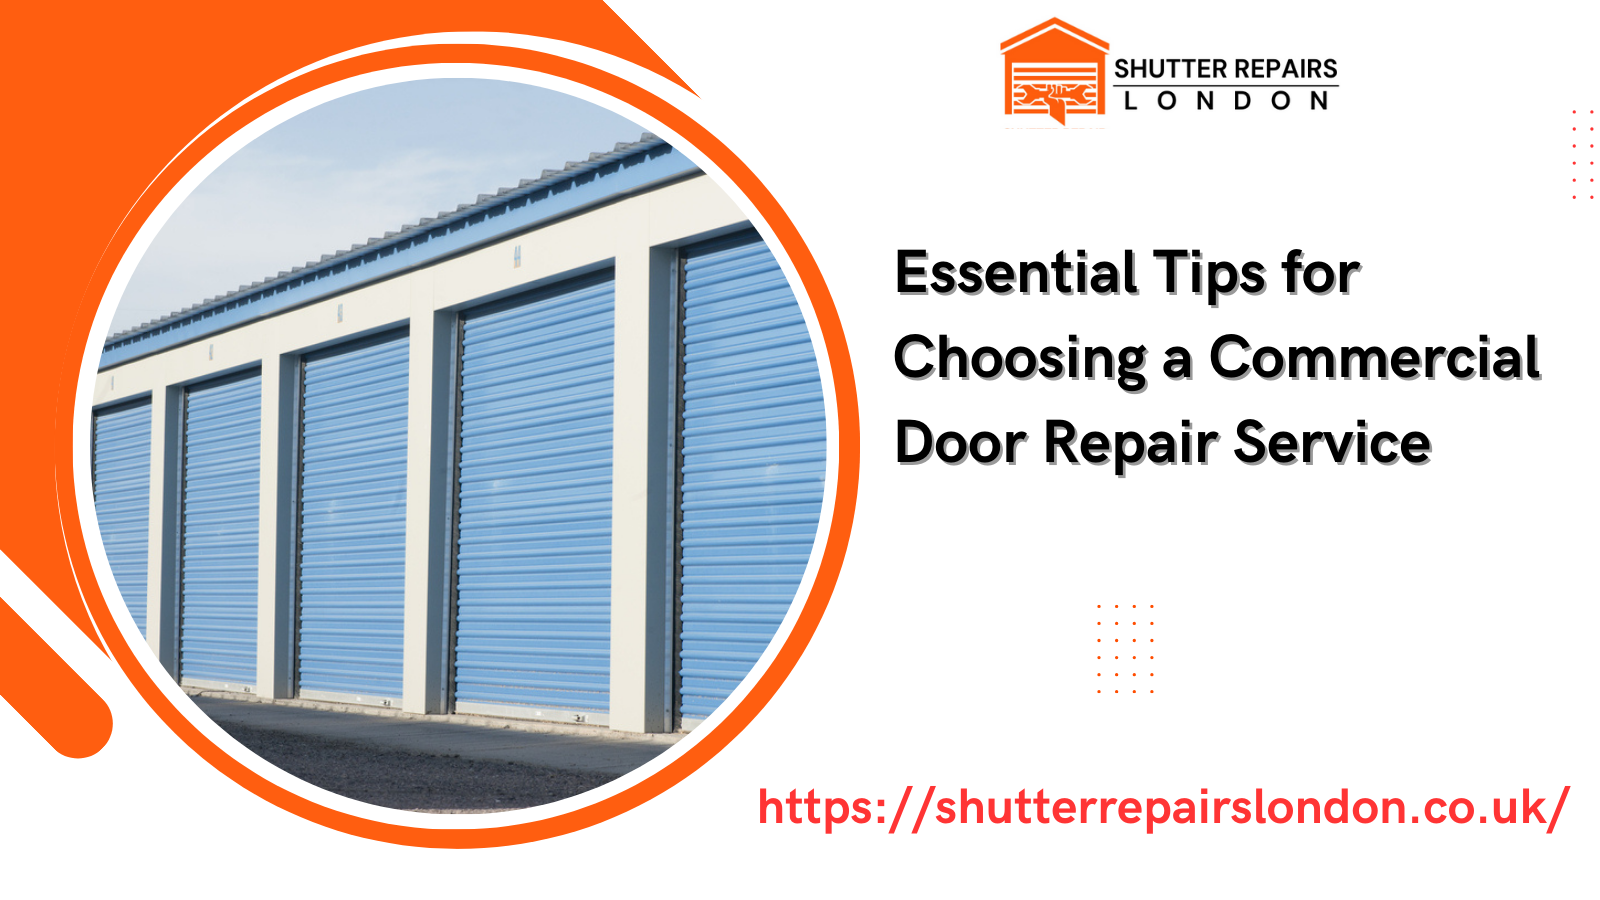 Essential Tips for Choosing a Commercial Door Repair Service